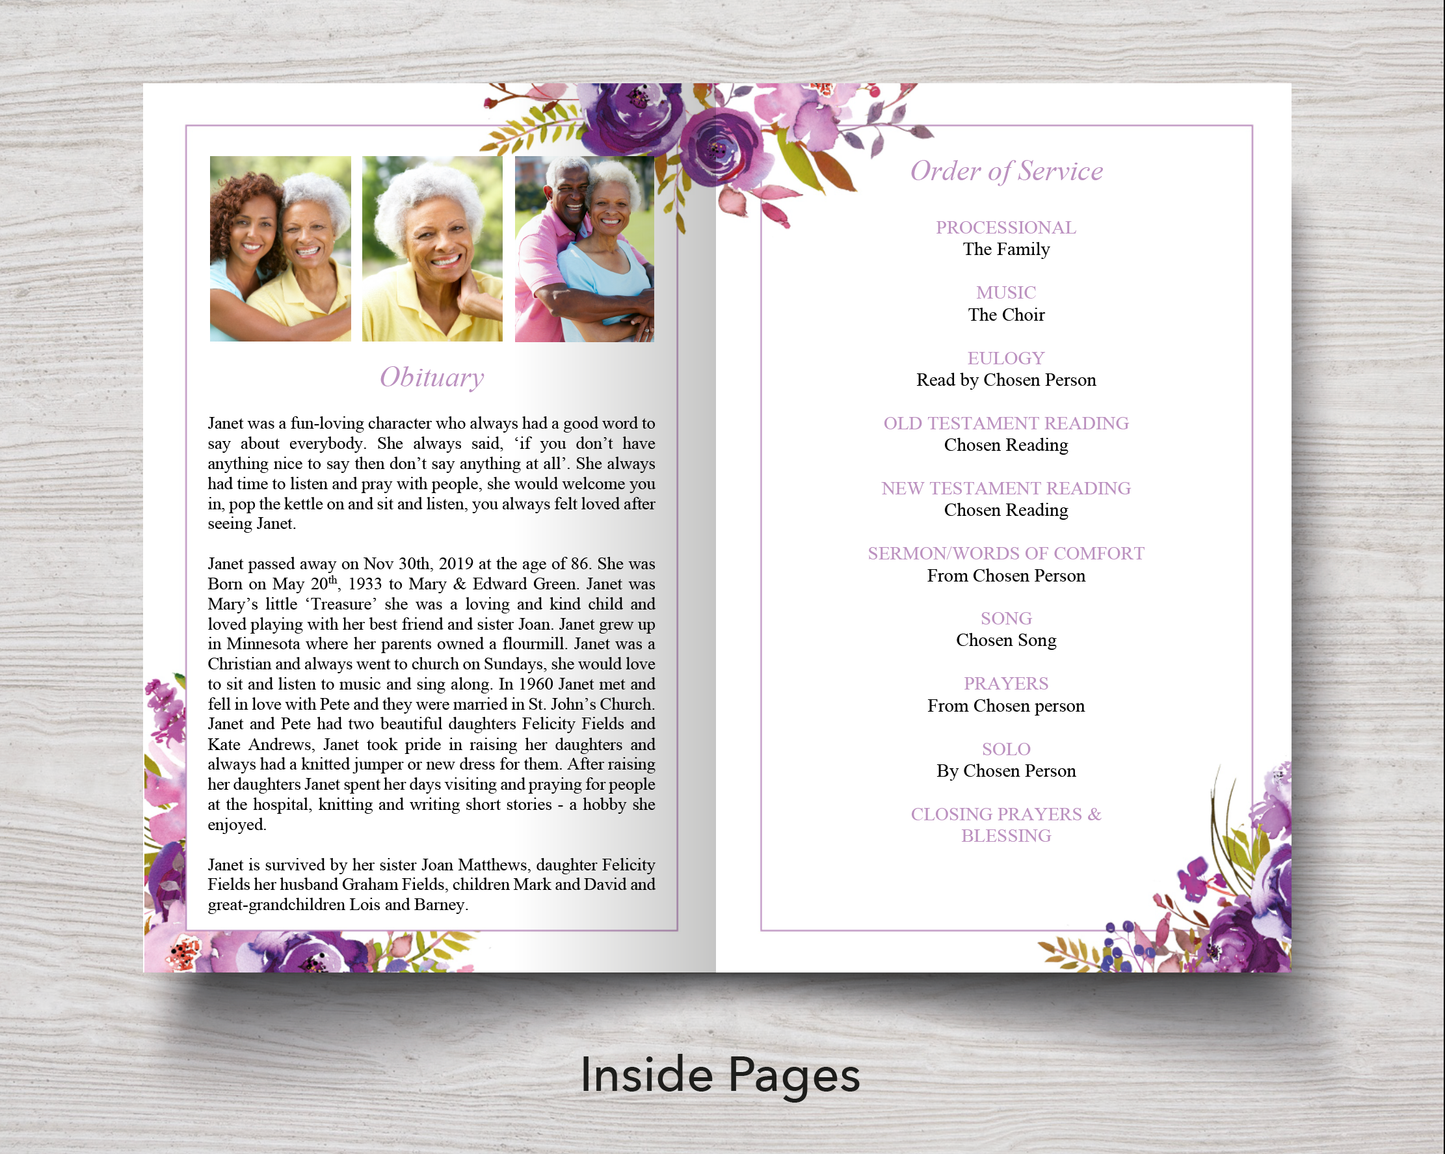 4 Page Peonies Corners Funeral Program Template